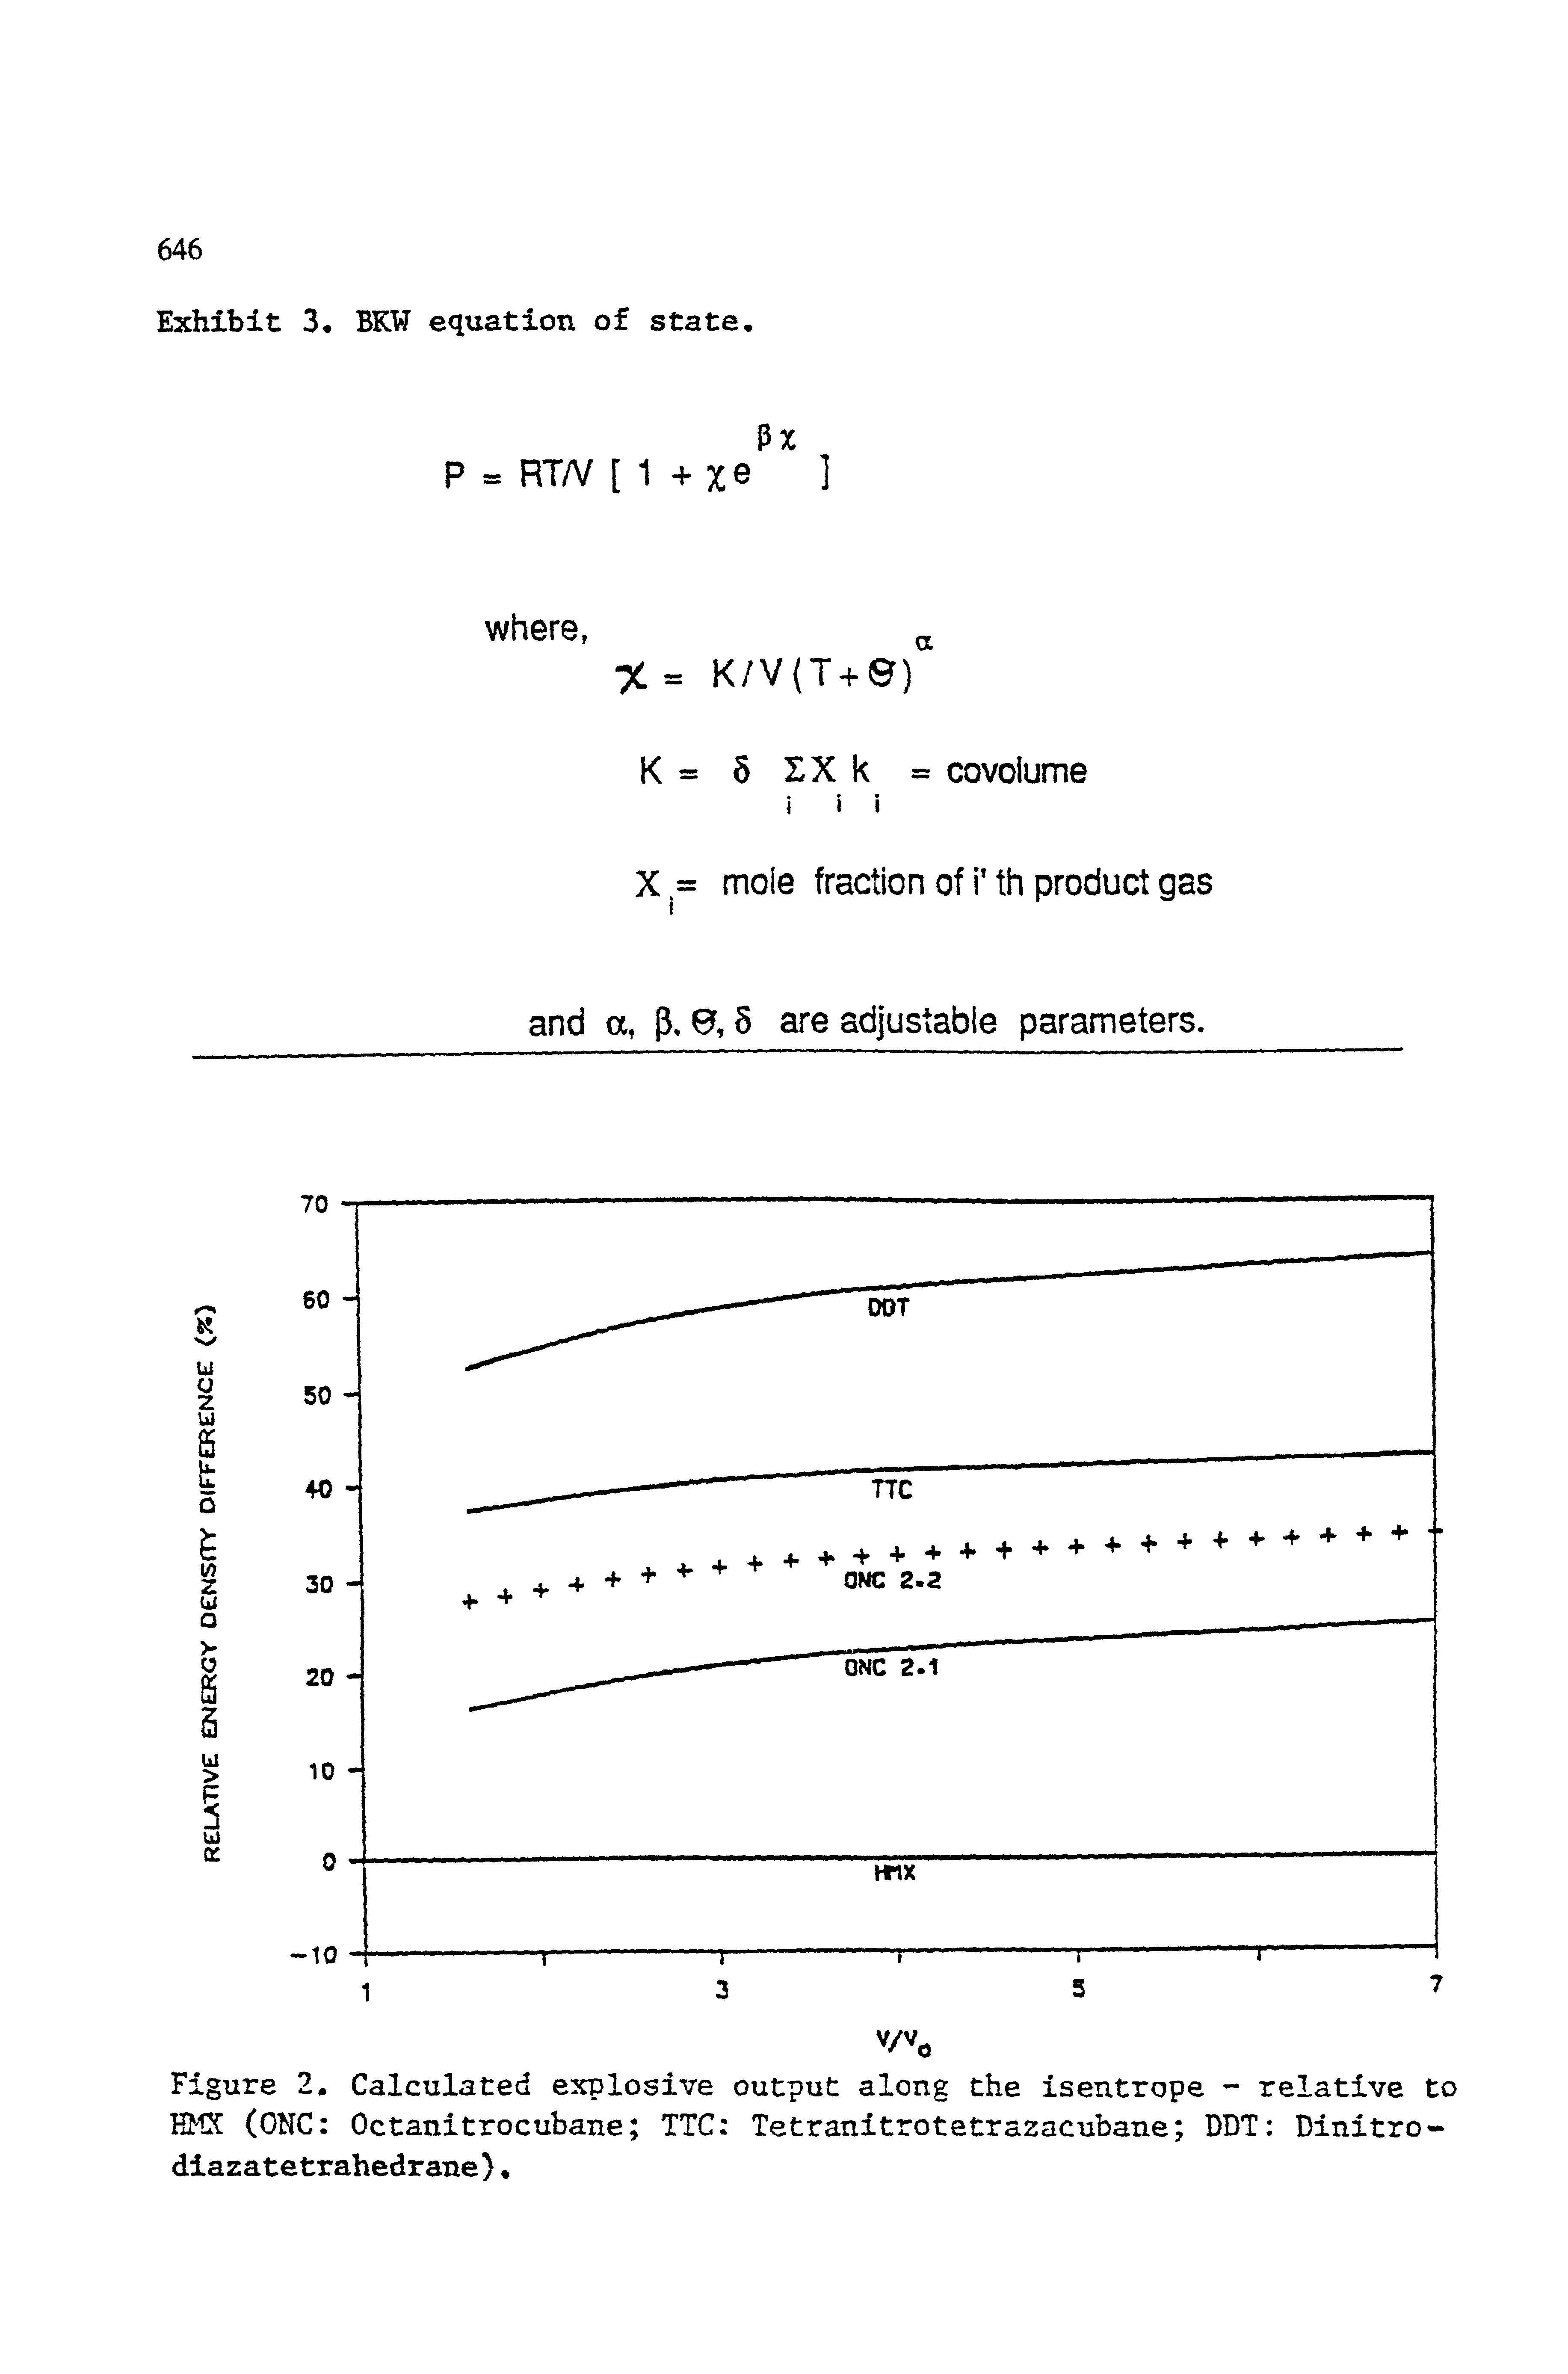 Figure 2. Calculated explosive output along the isentrope - relative to HMX (ONC Octanitrocubane TTC Tetranitrotetrazacubane DDT Dinitro- diazatetrahedrane).